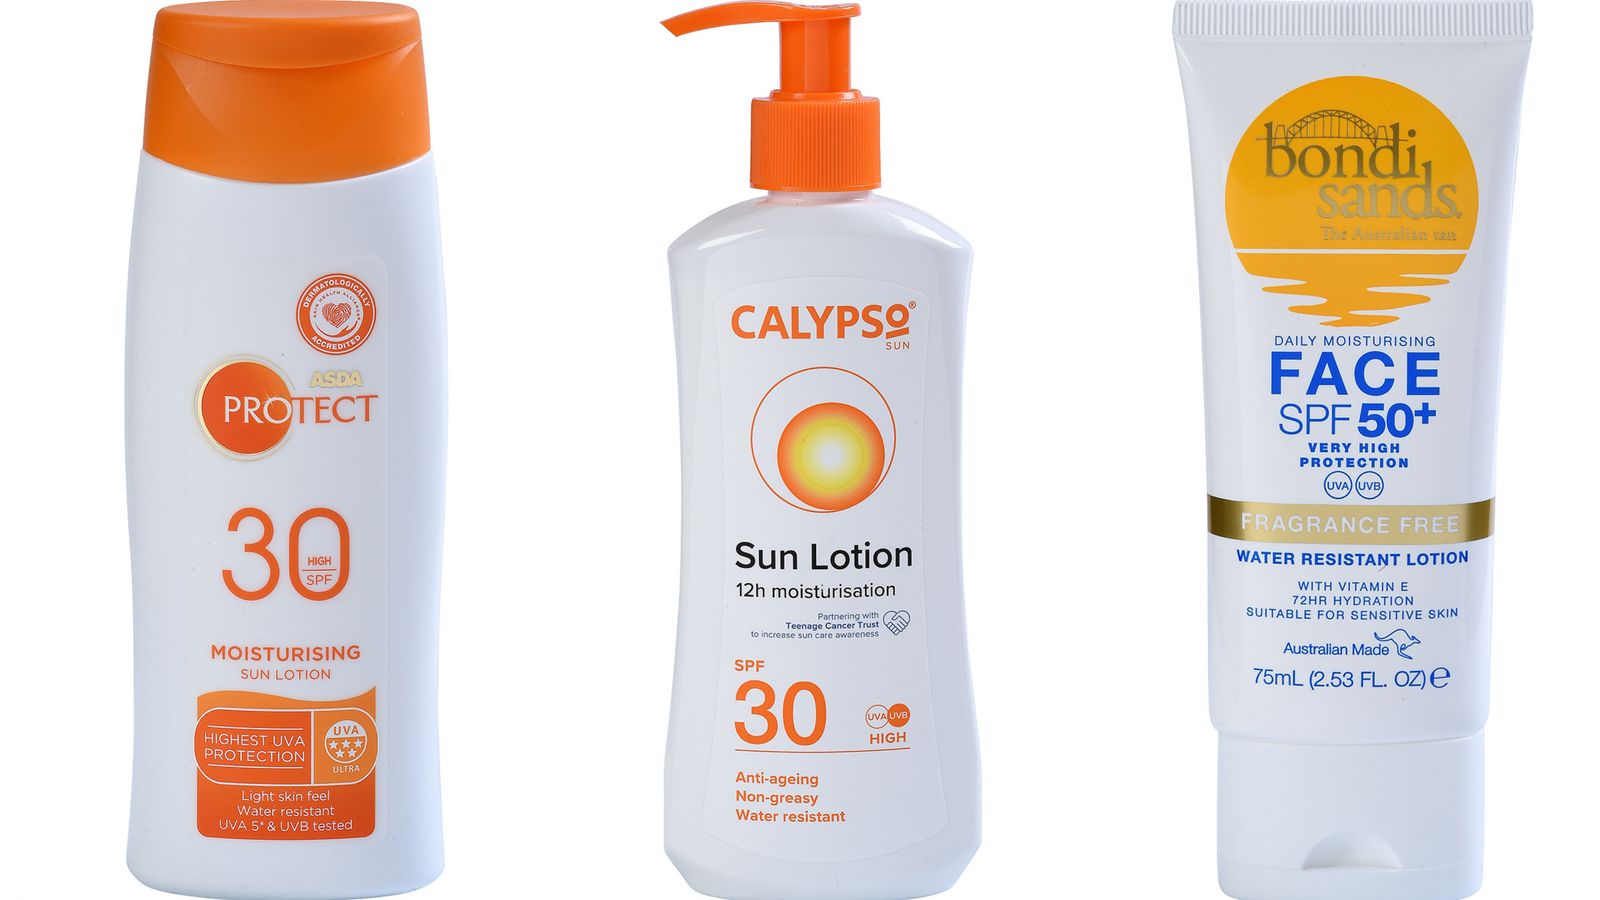 • Asda Protect Хидратиращ слънцезащитен лосион SPF 30 High• Calypso